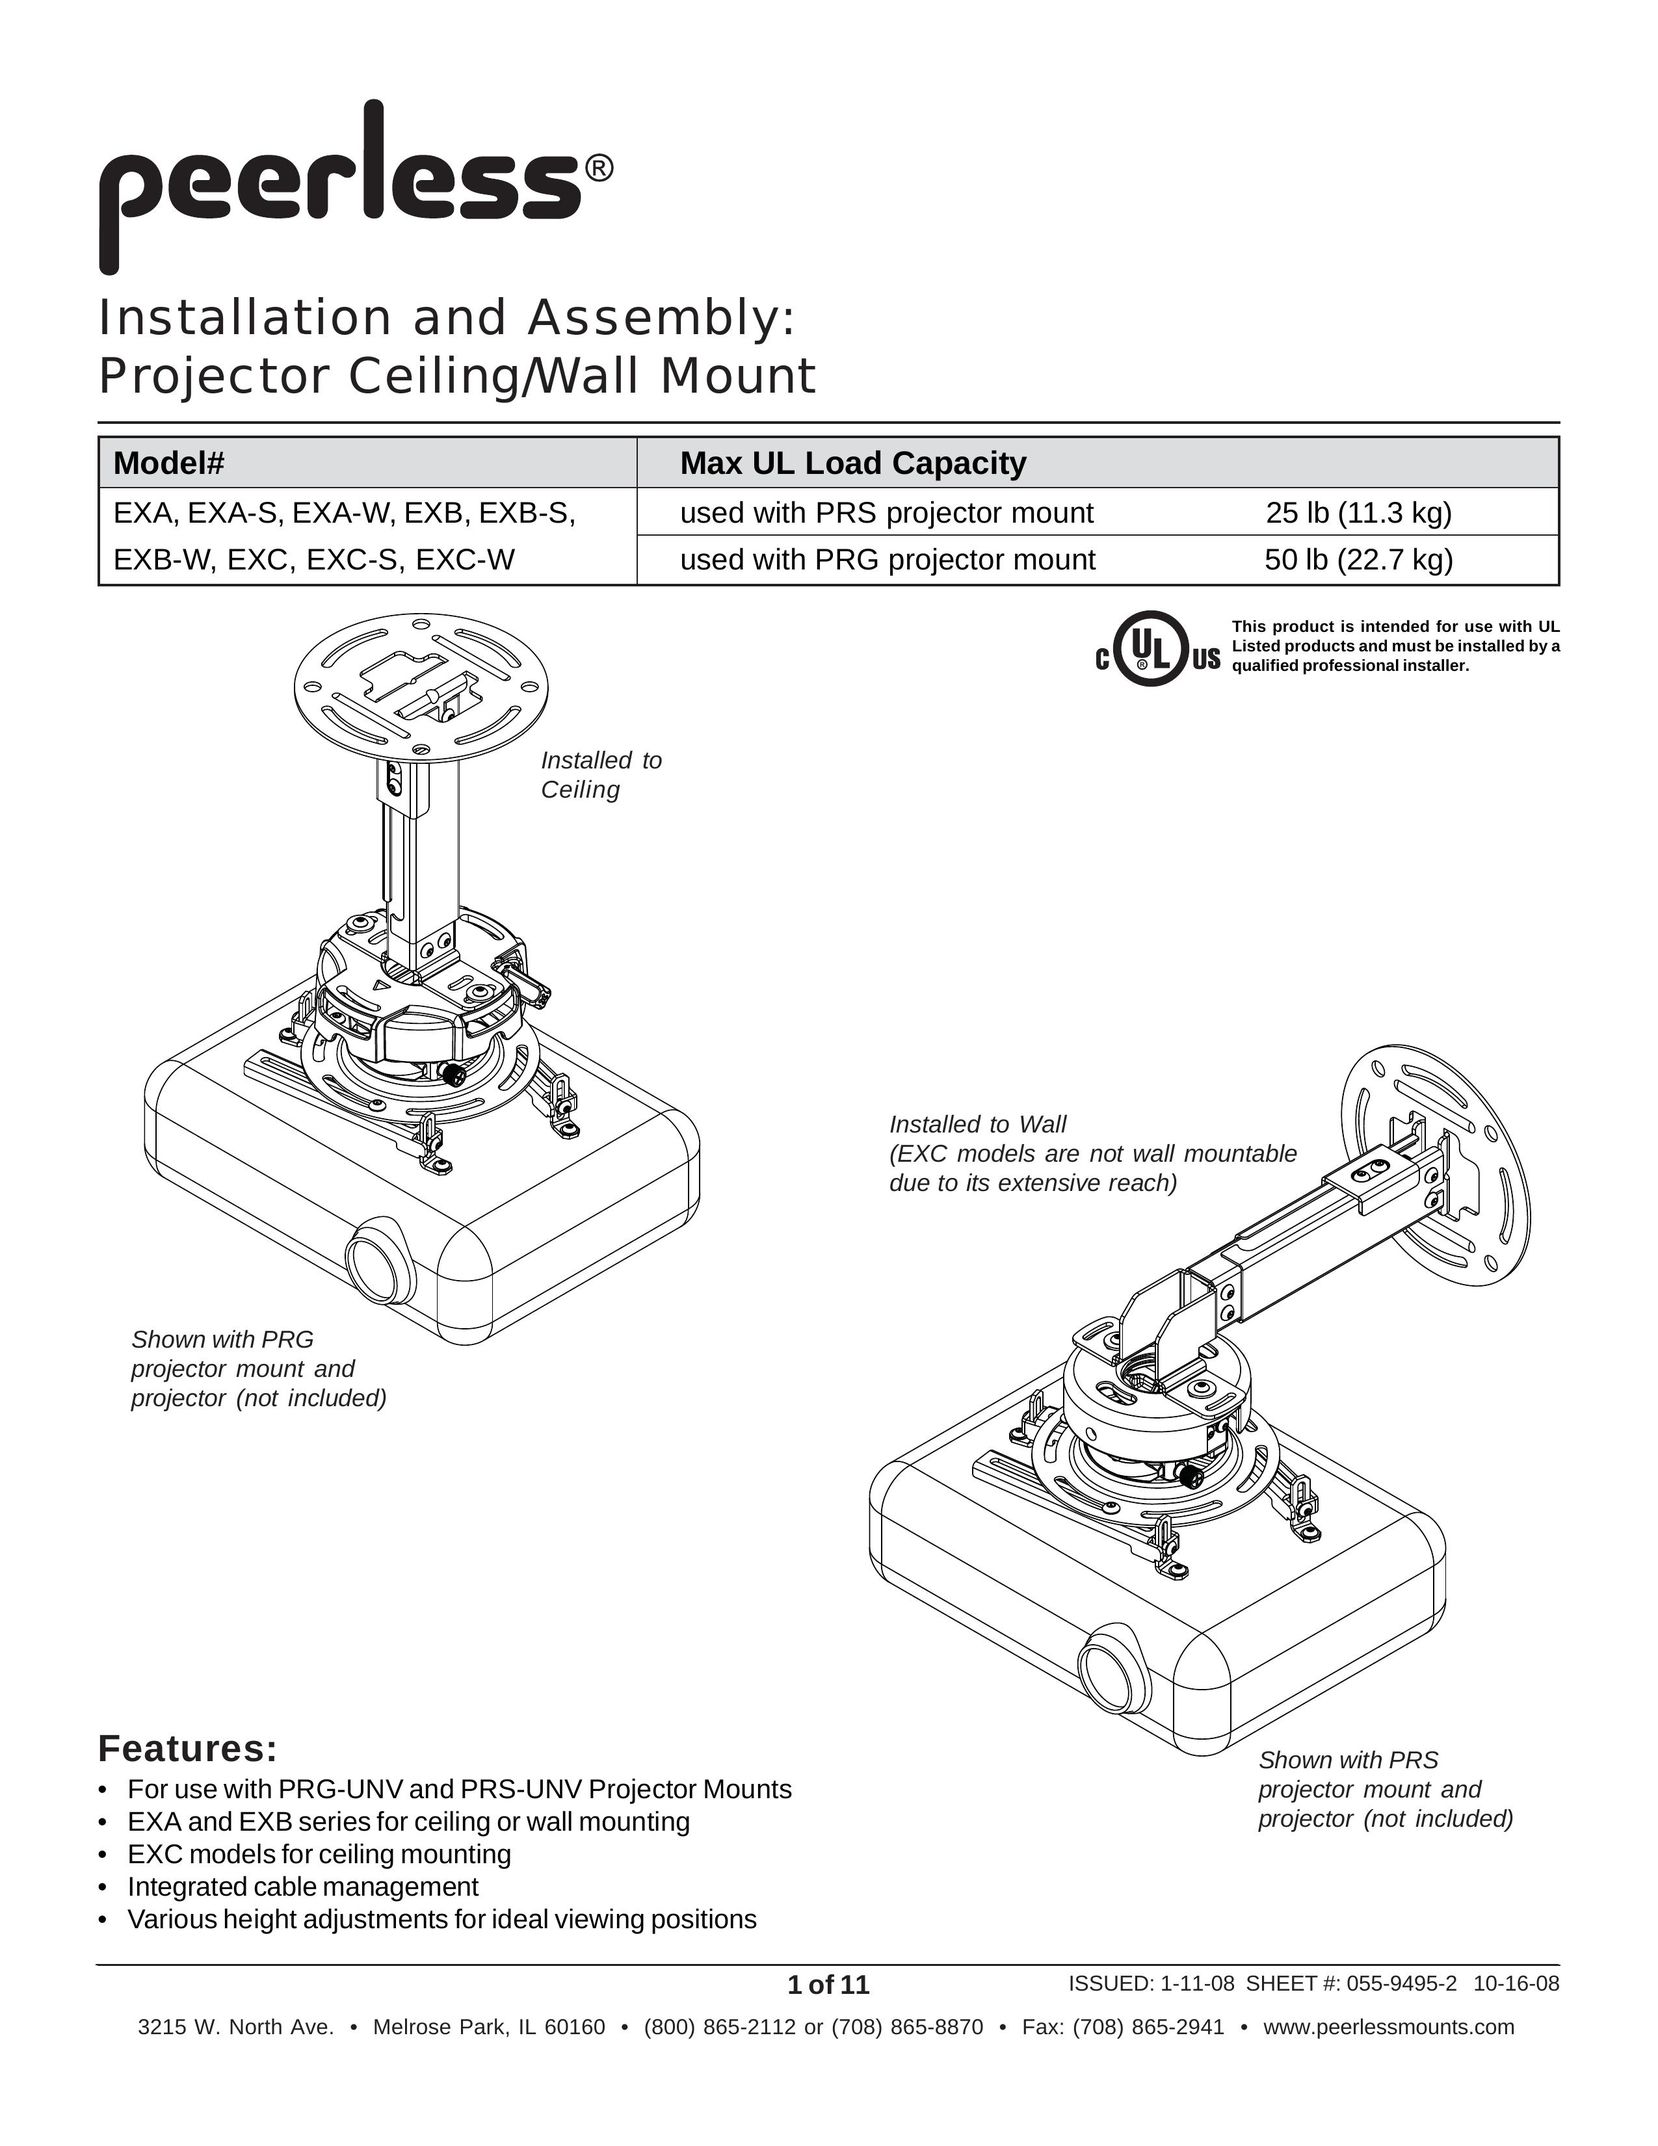 Peerless Industries EXB Projector User Manual